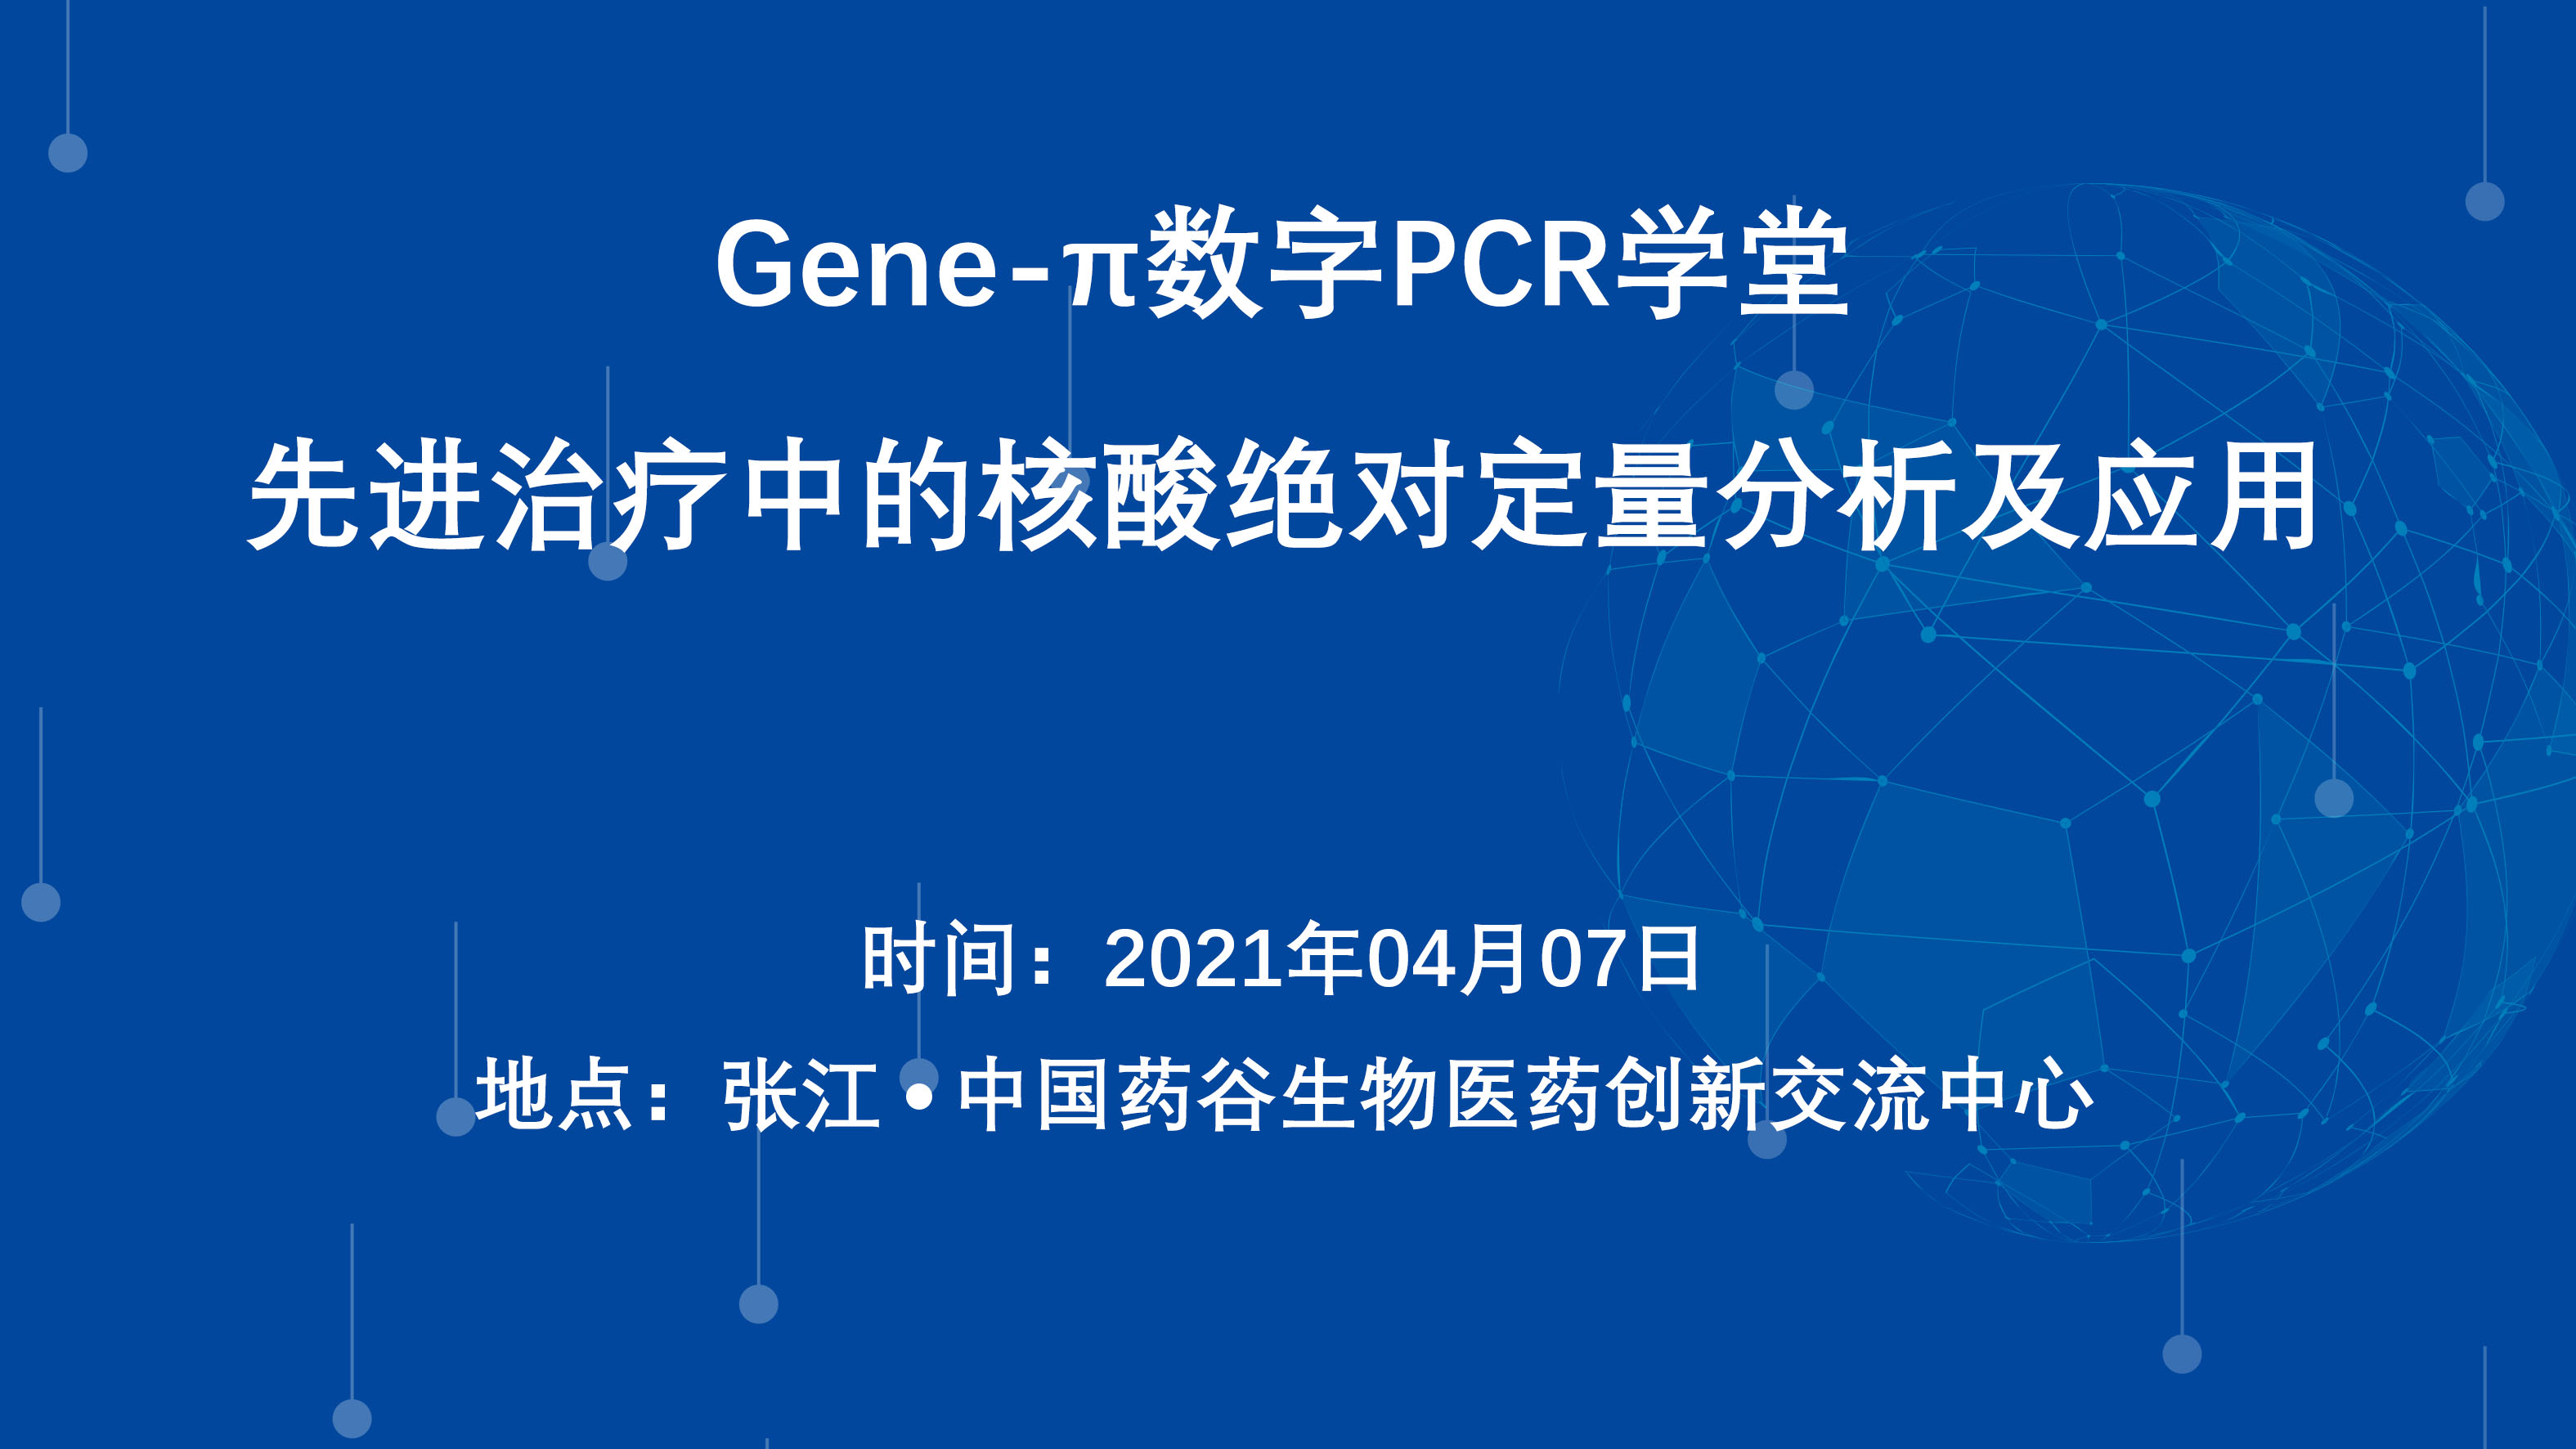 Gene-π数字PCR学堂——先进治疗中的核酸绝对定量分析及应用（上海张江站）